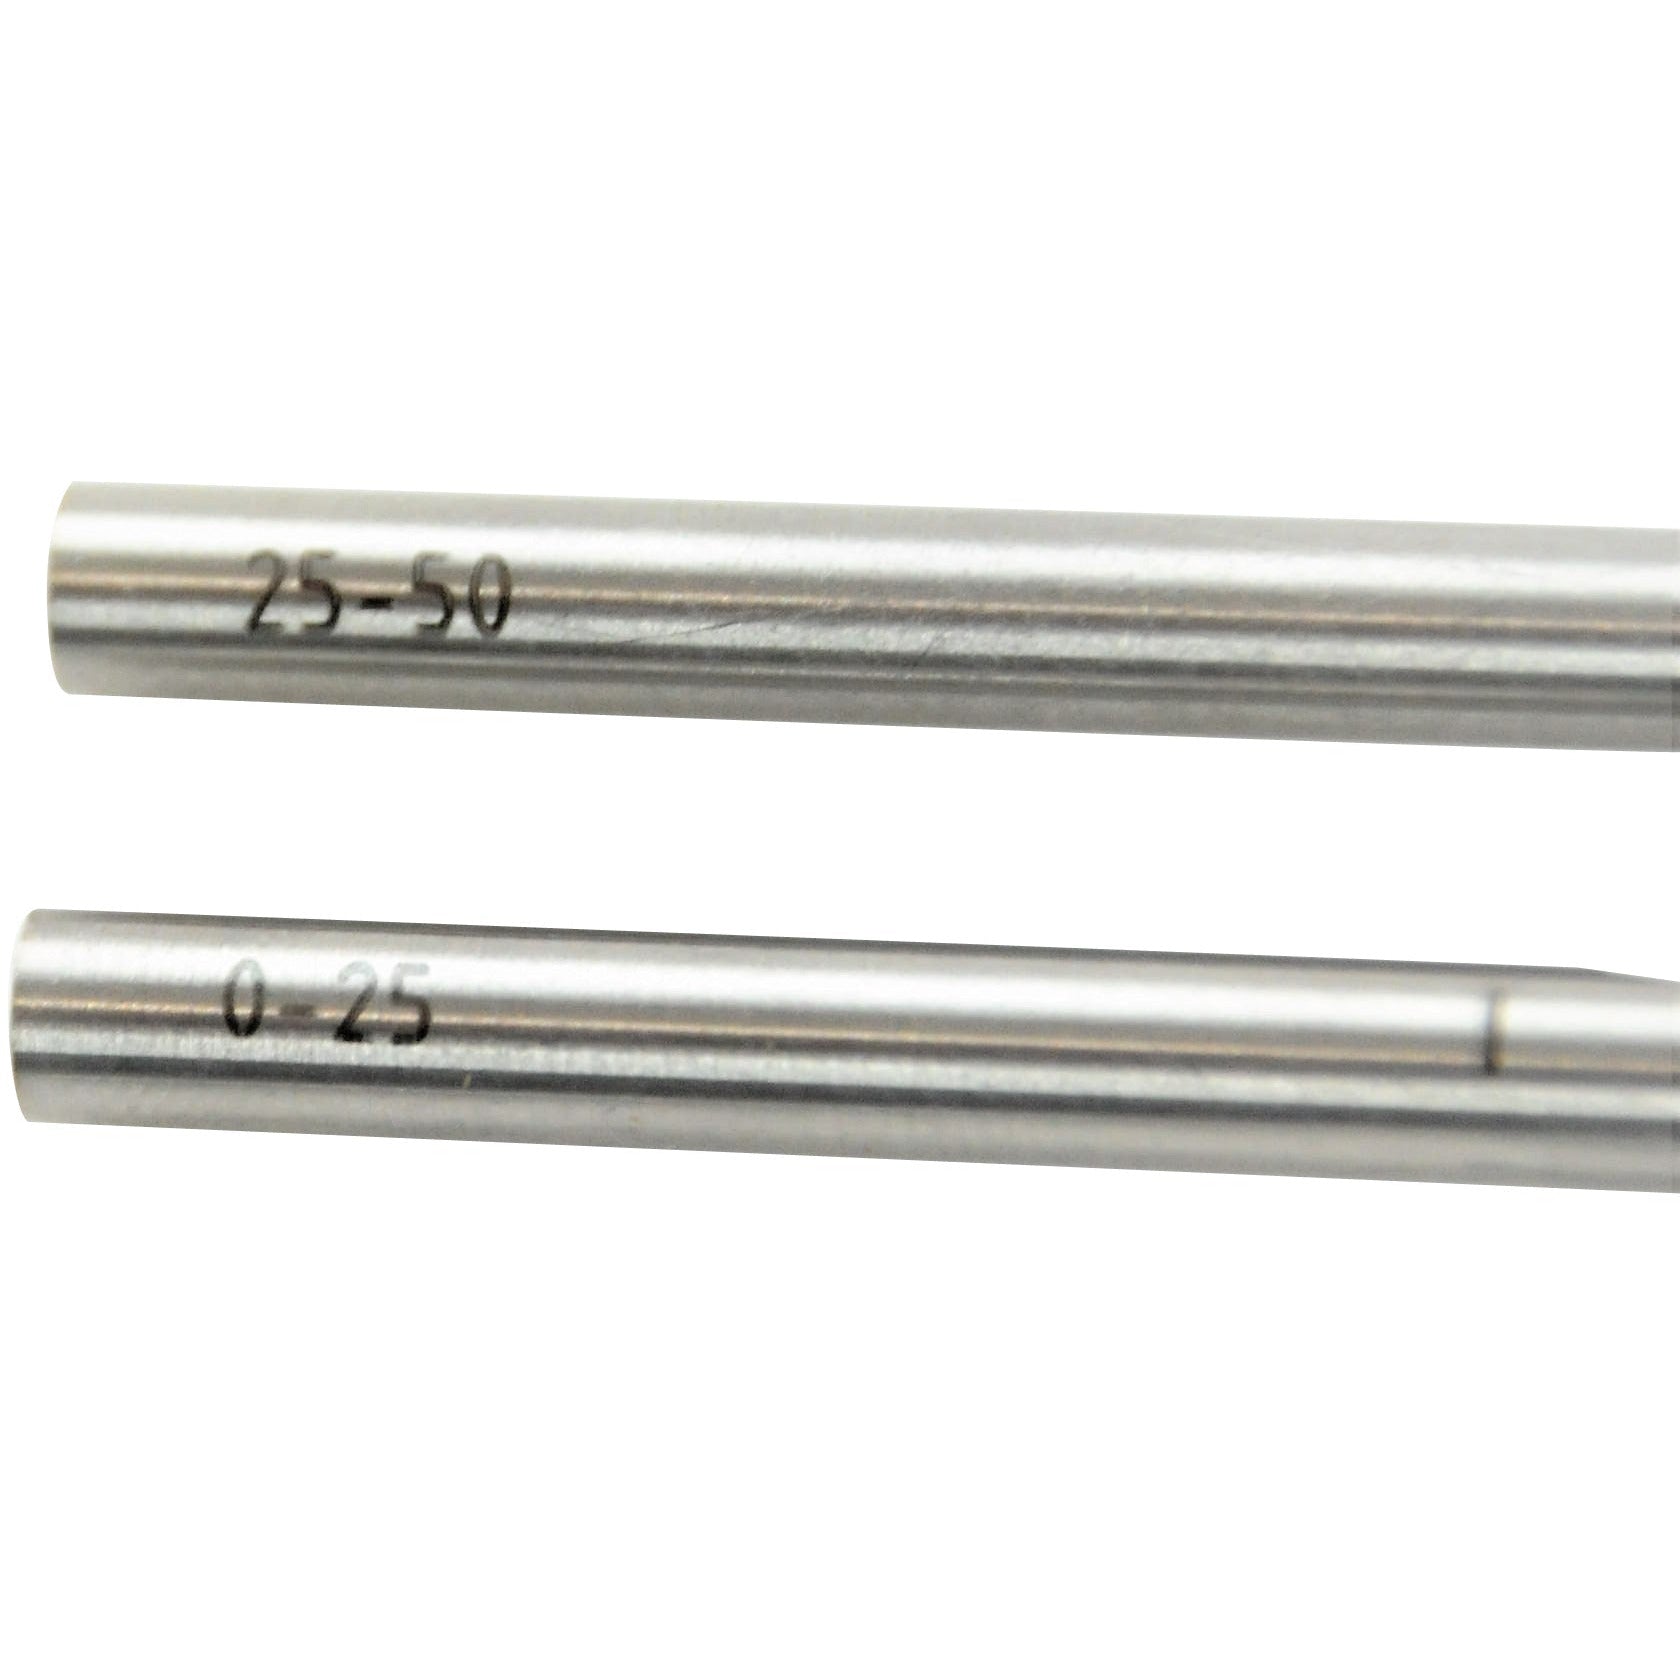 Insize Imperial Depth Micrometer 0-50mm Range Series 3240 - 50